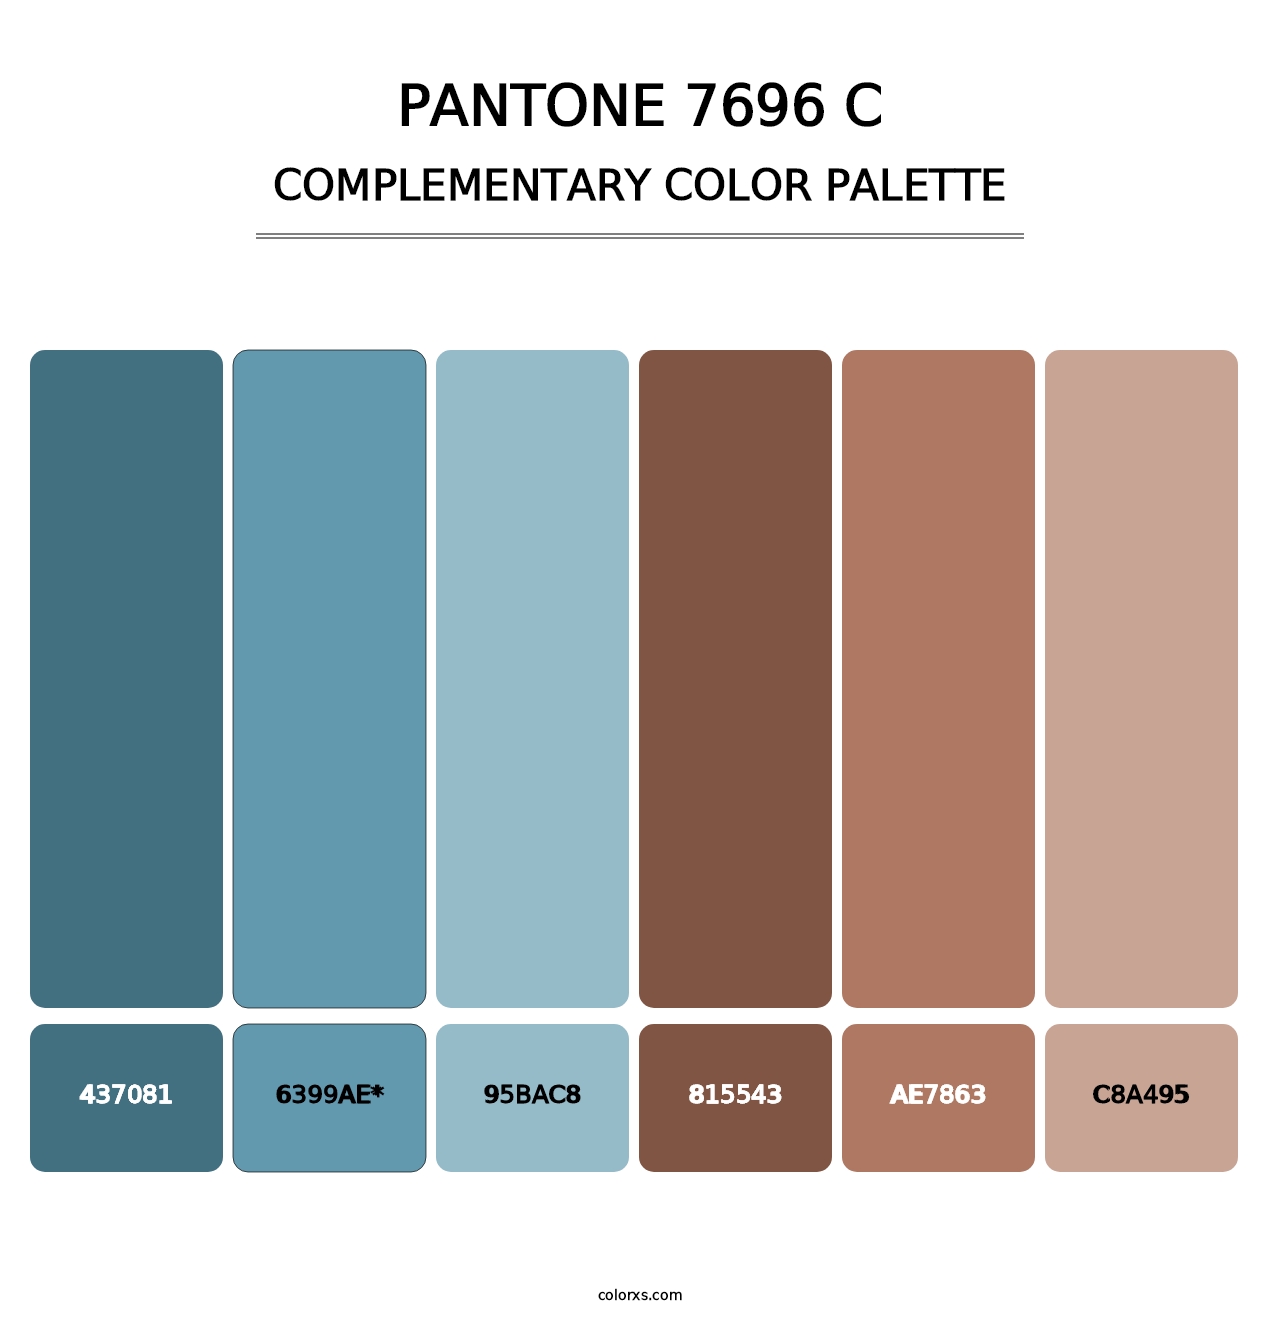 PANTONE 7696 C - Complementary Color Palette